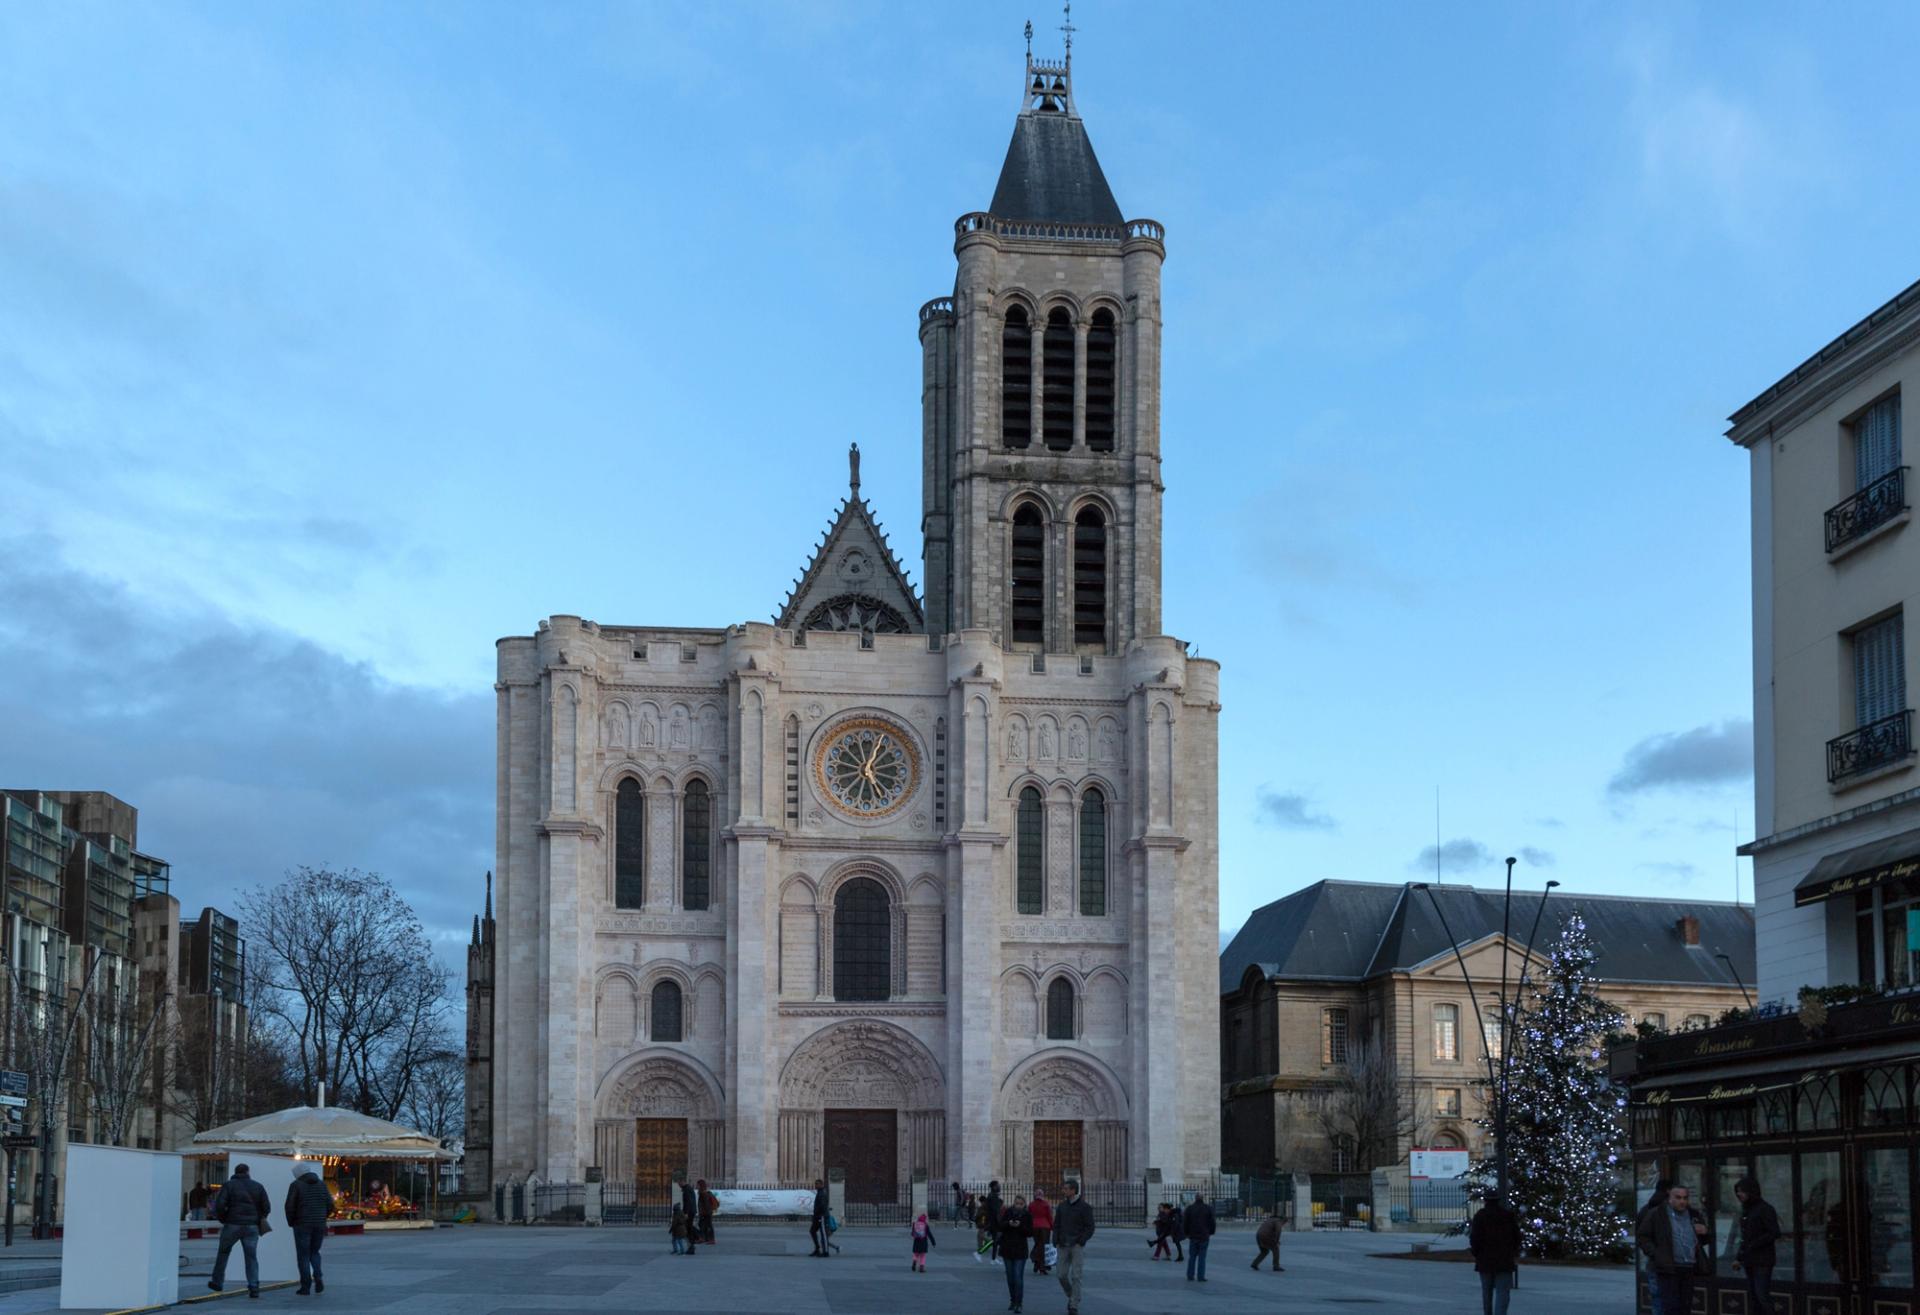 La basilique de Saint-Denis. Photo : Ninara / Flickr